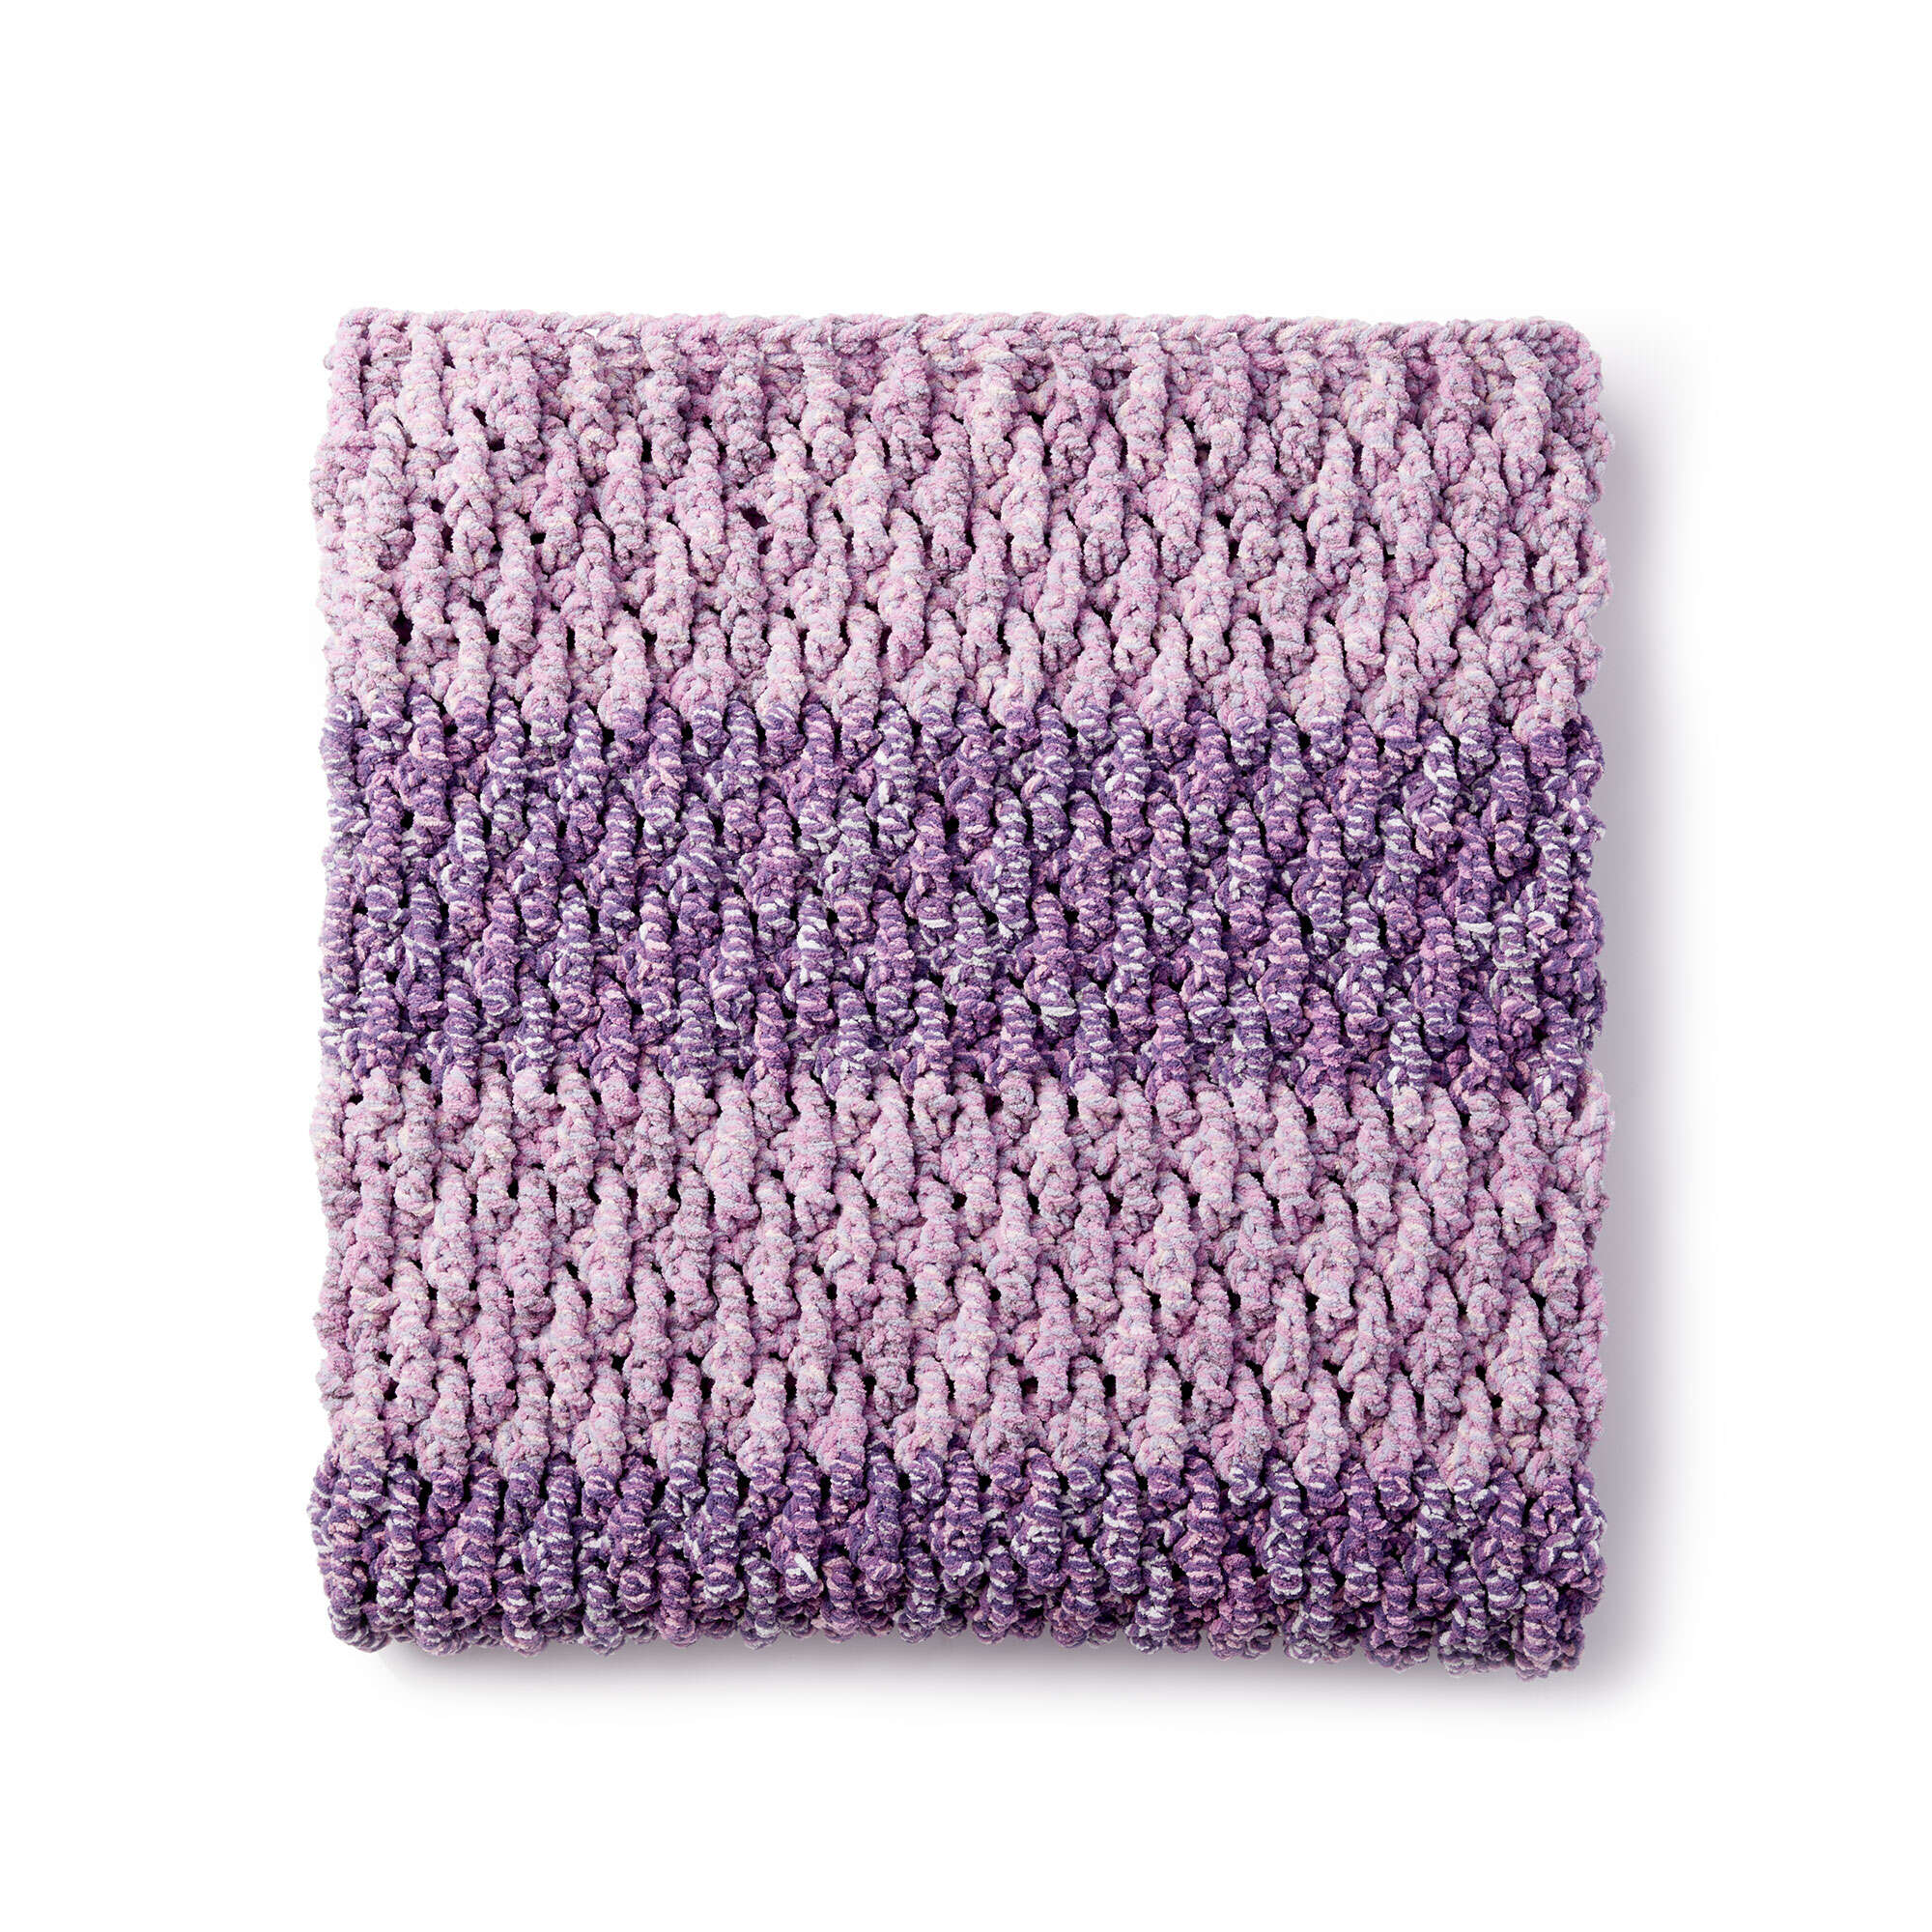 Bernat Textured Life Crochet Blanket Pattern